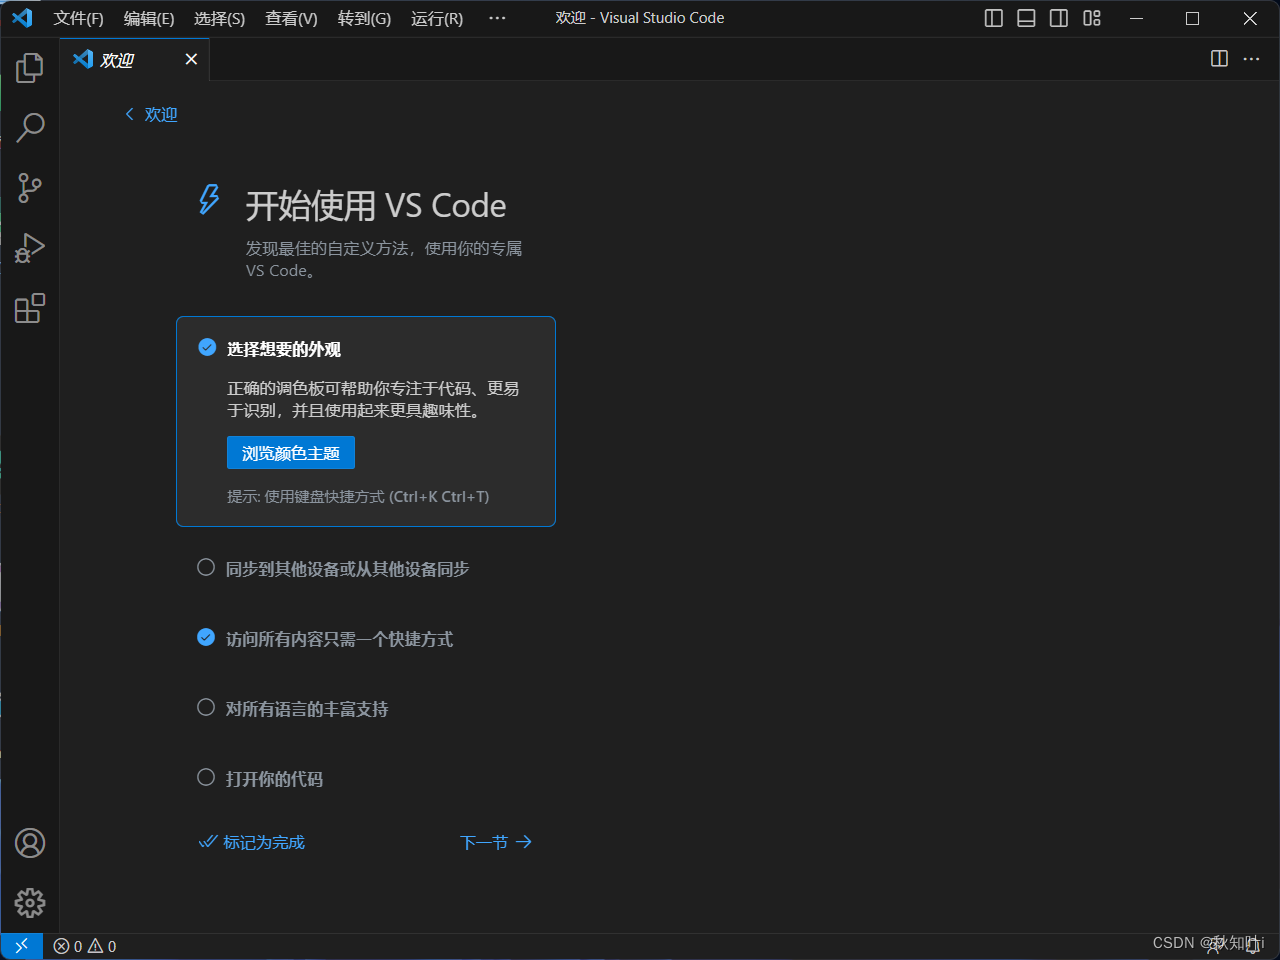 【Visual Studio Code】--- Win11 配置 VS Code 为中文 超详细